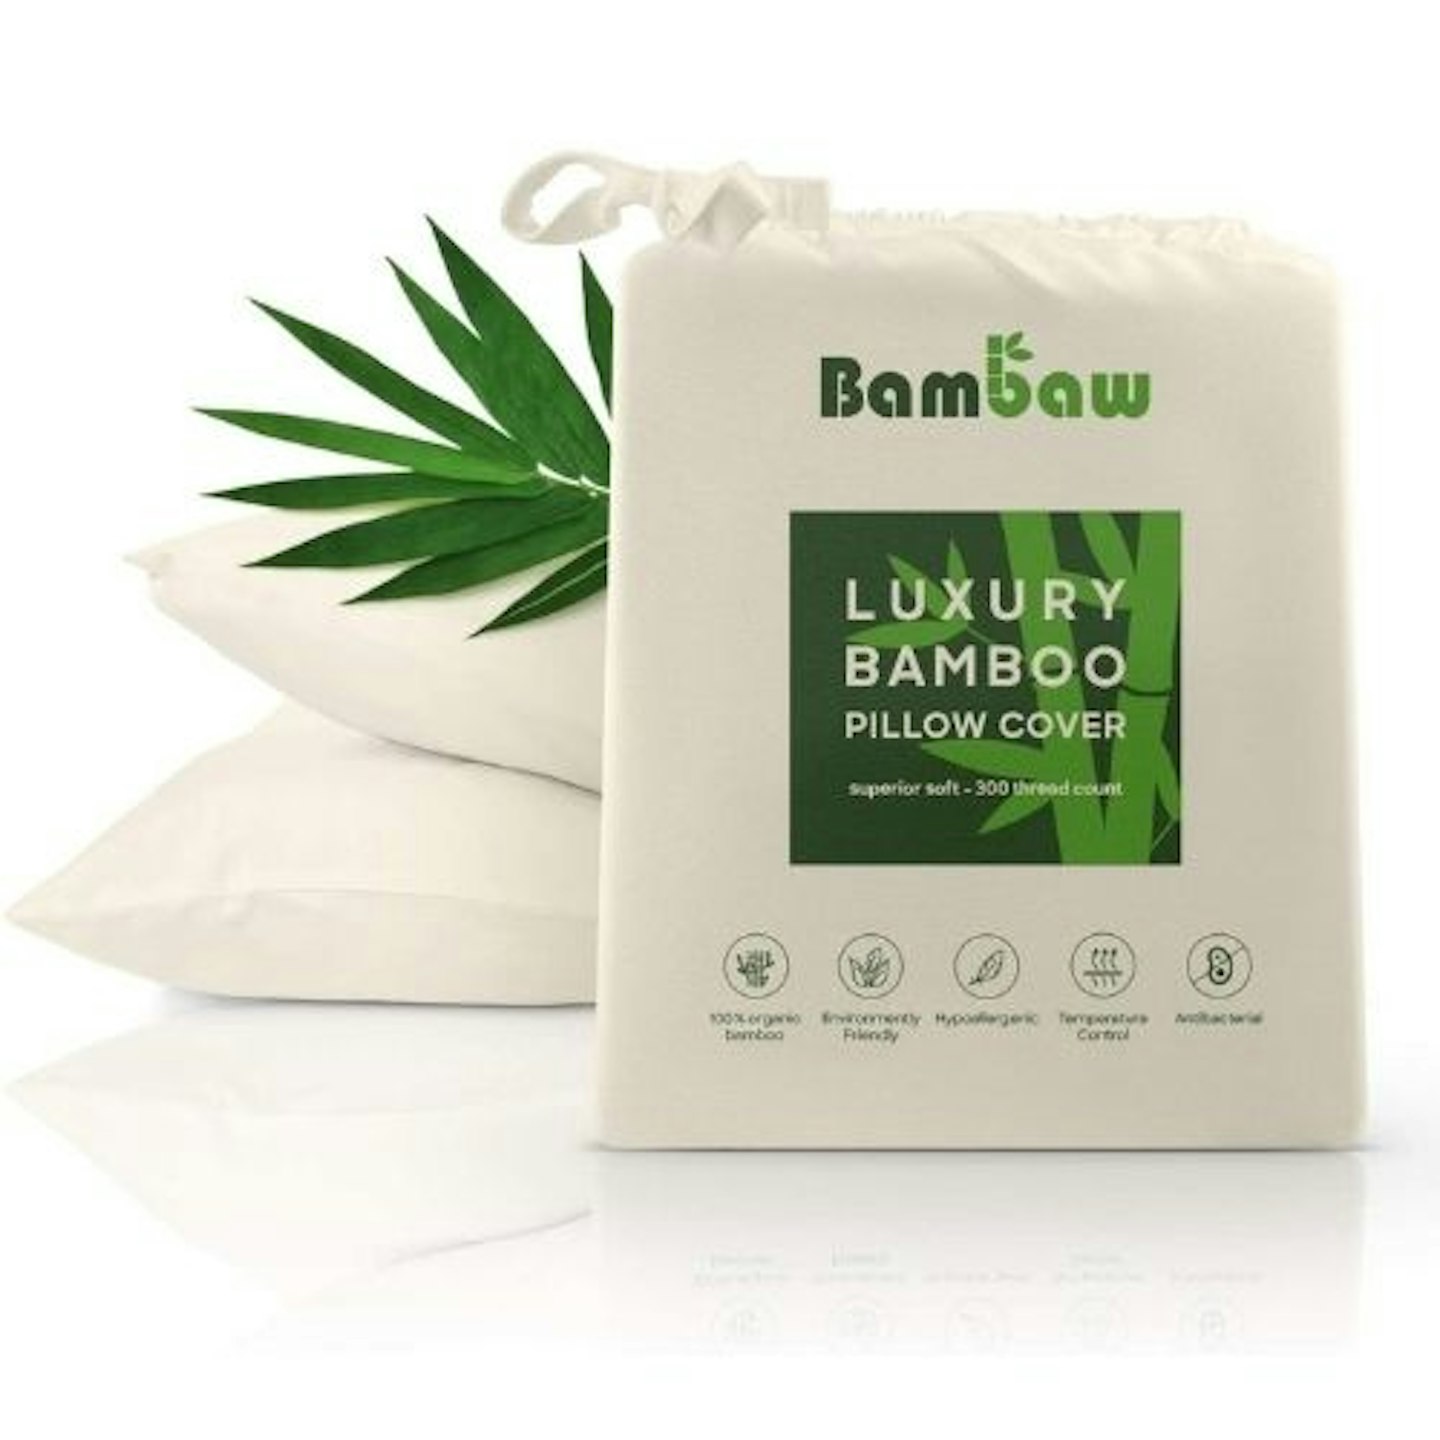 Bambaw Bamboo Pillow Case u2013 2 pack